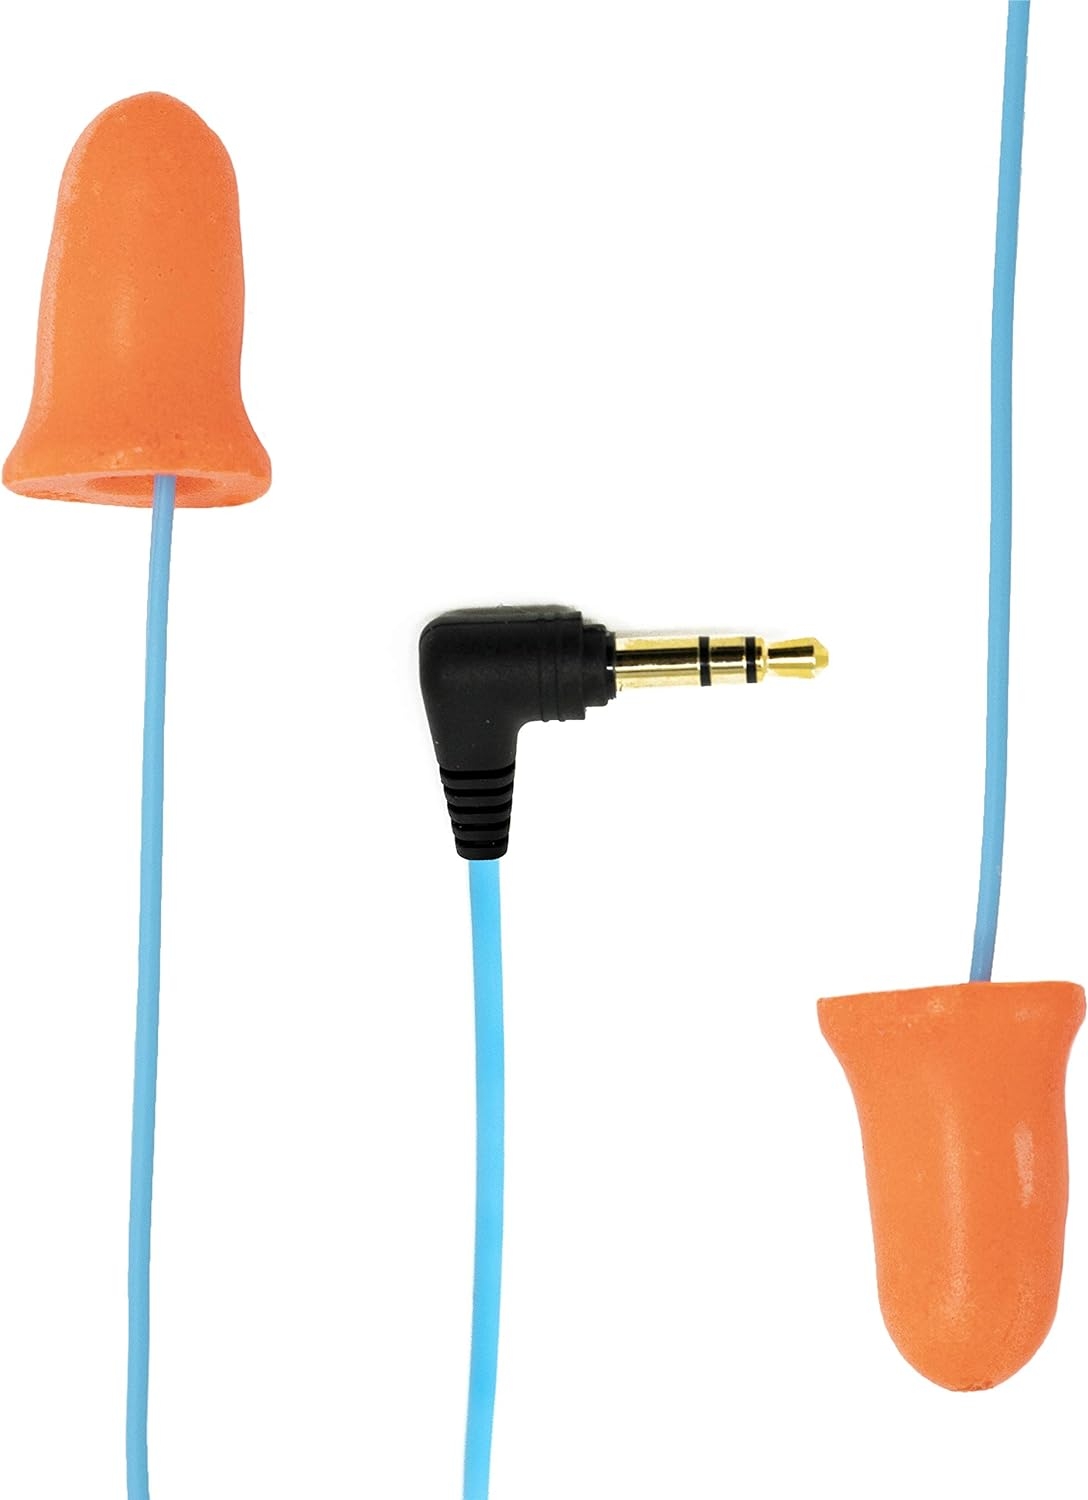 Plugfones Basic Earplug-Earbud Hybrid - Noise Reducing Earphones - Orange